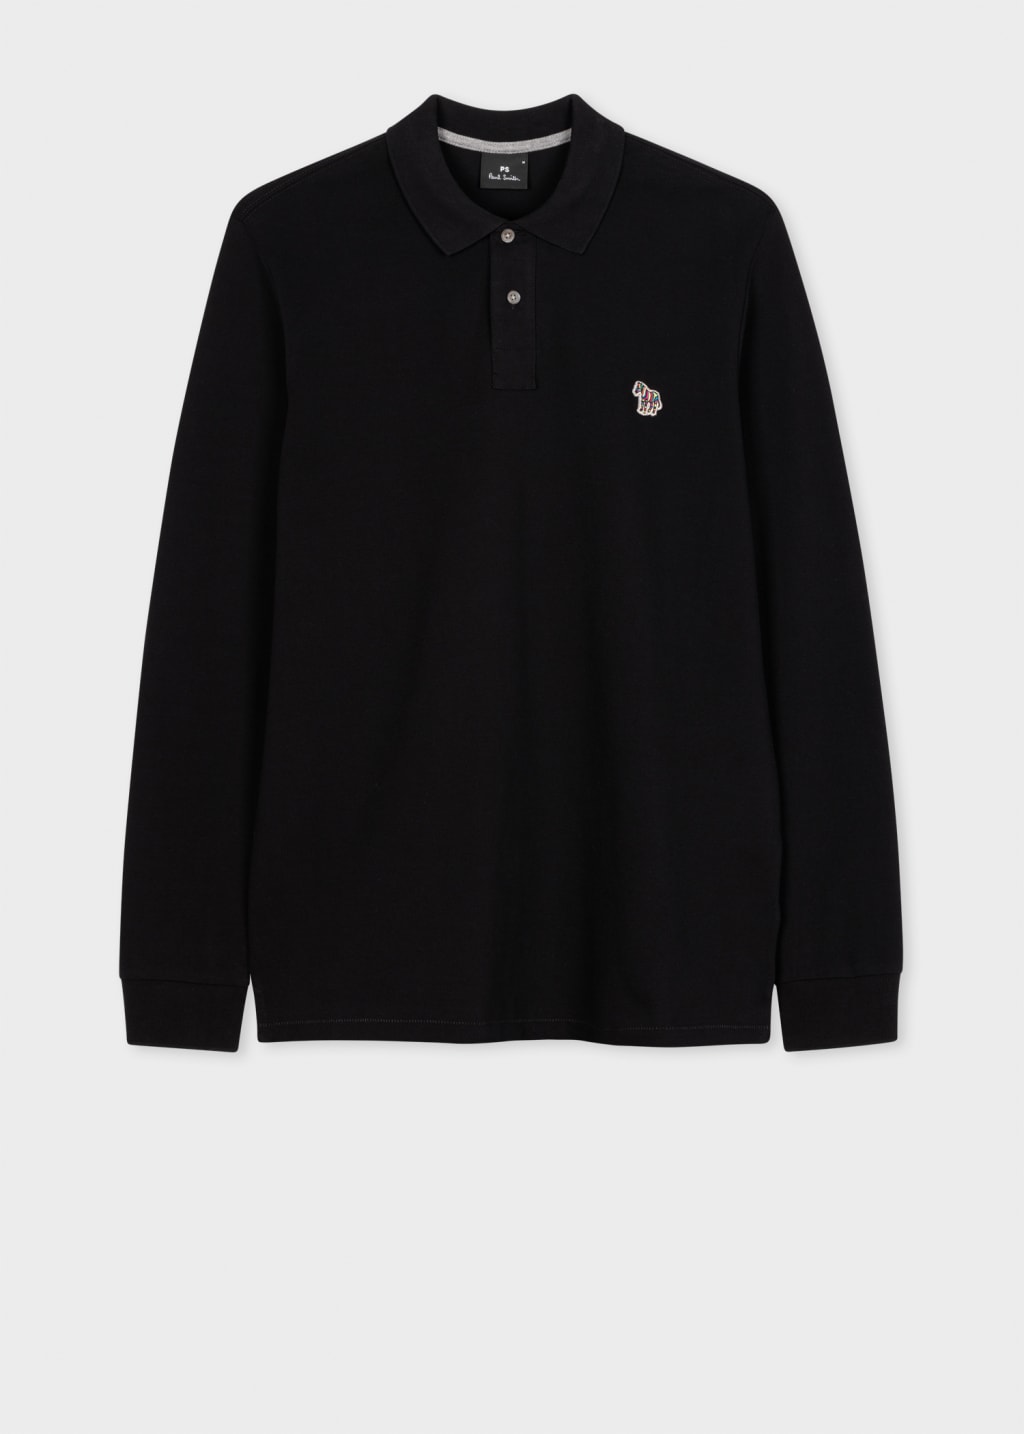 Front View - Black Cotton Zebra Logo Long-Sleeve Polo Shirt Paul Smith